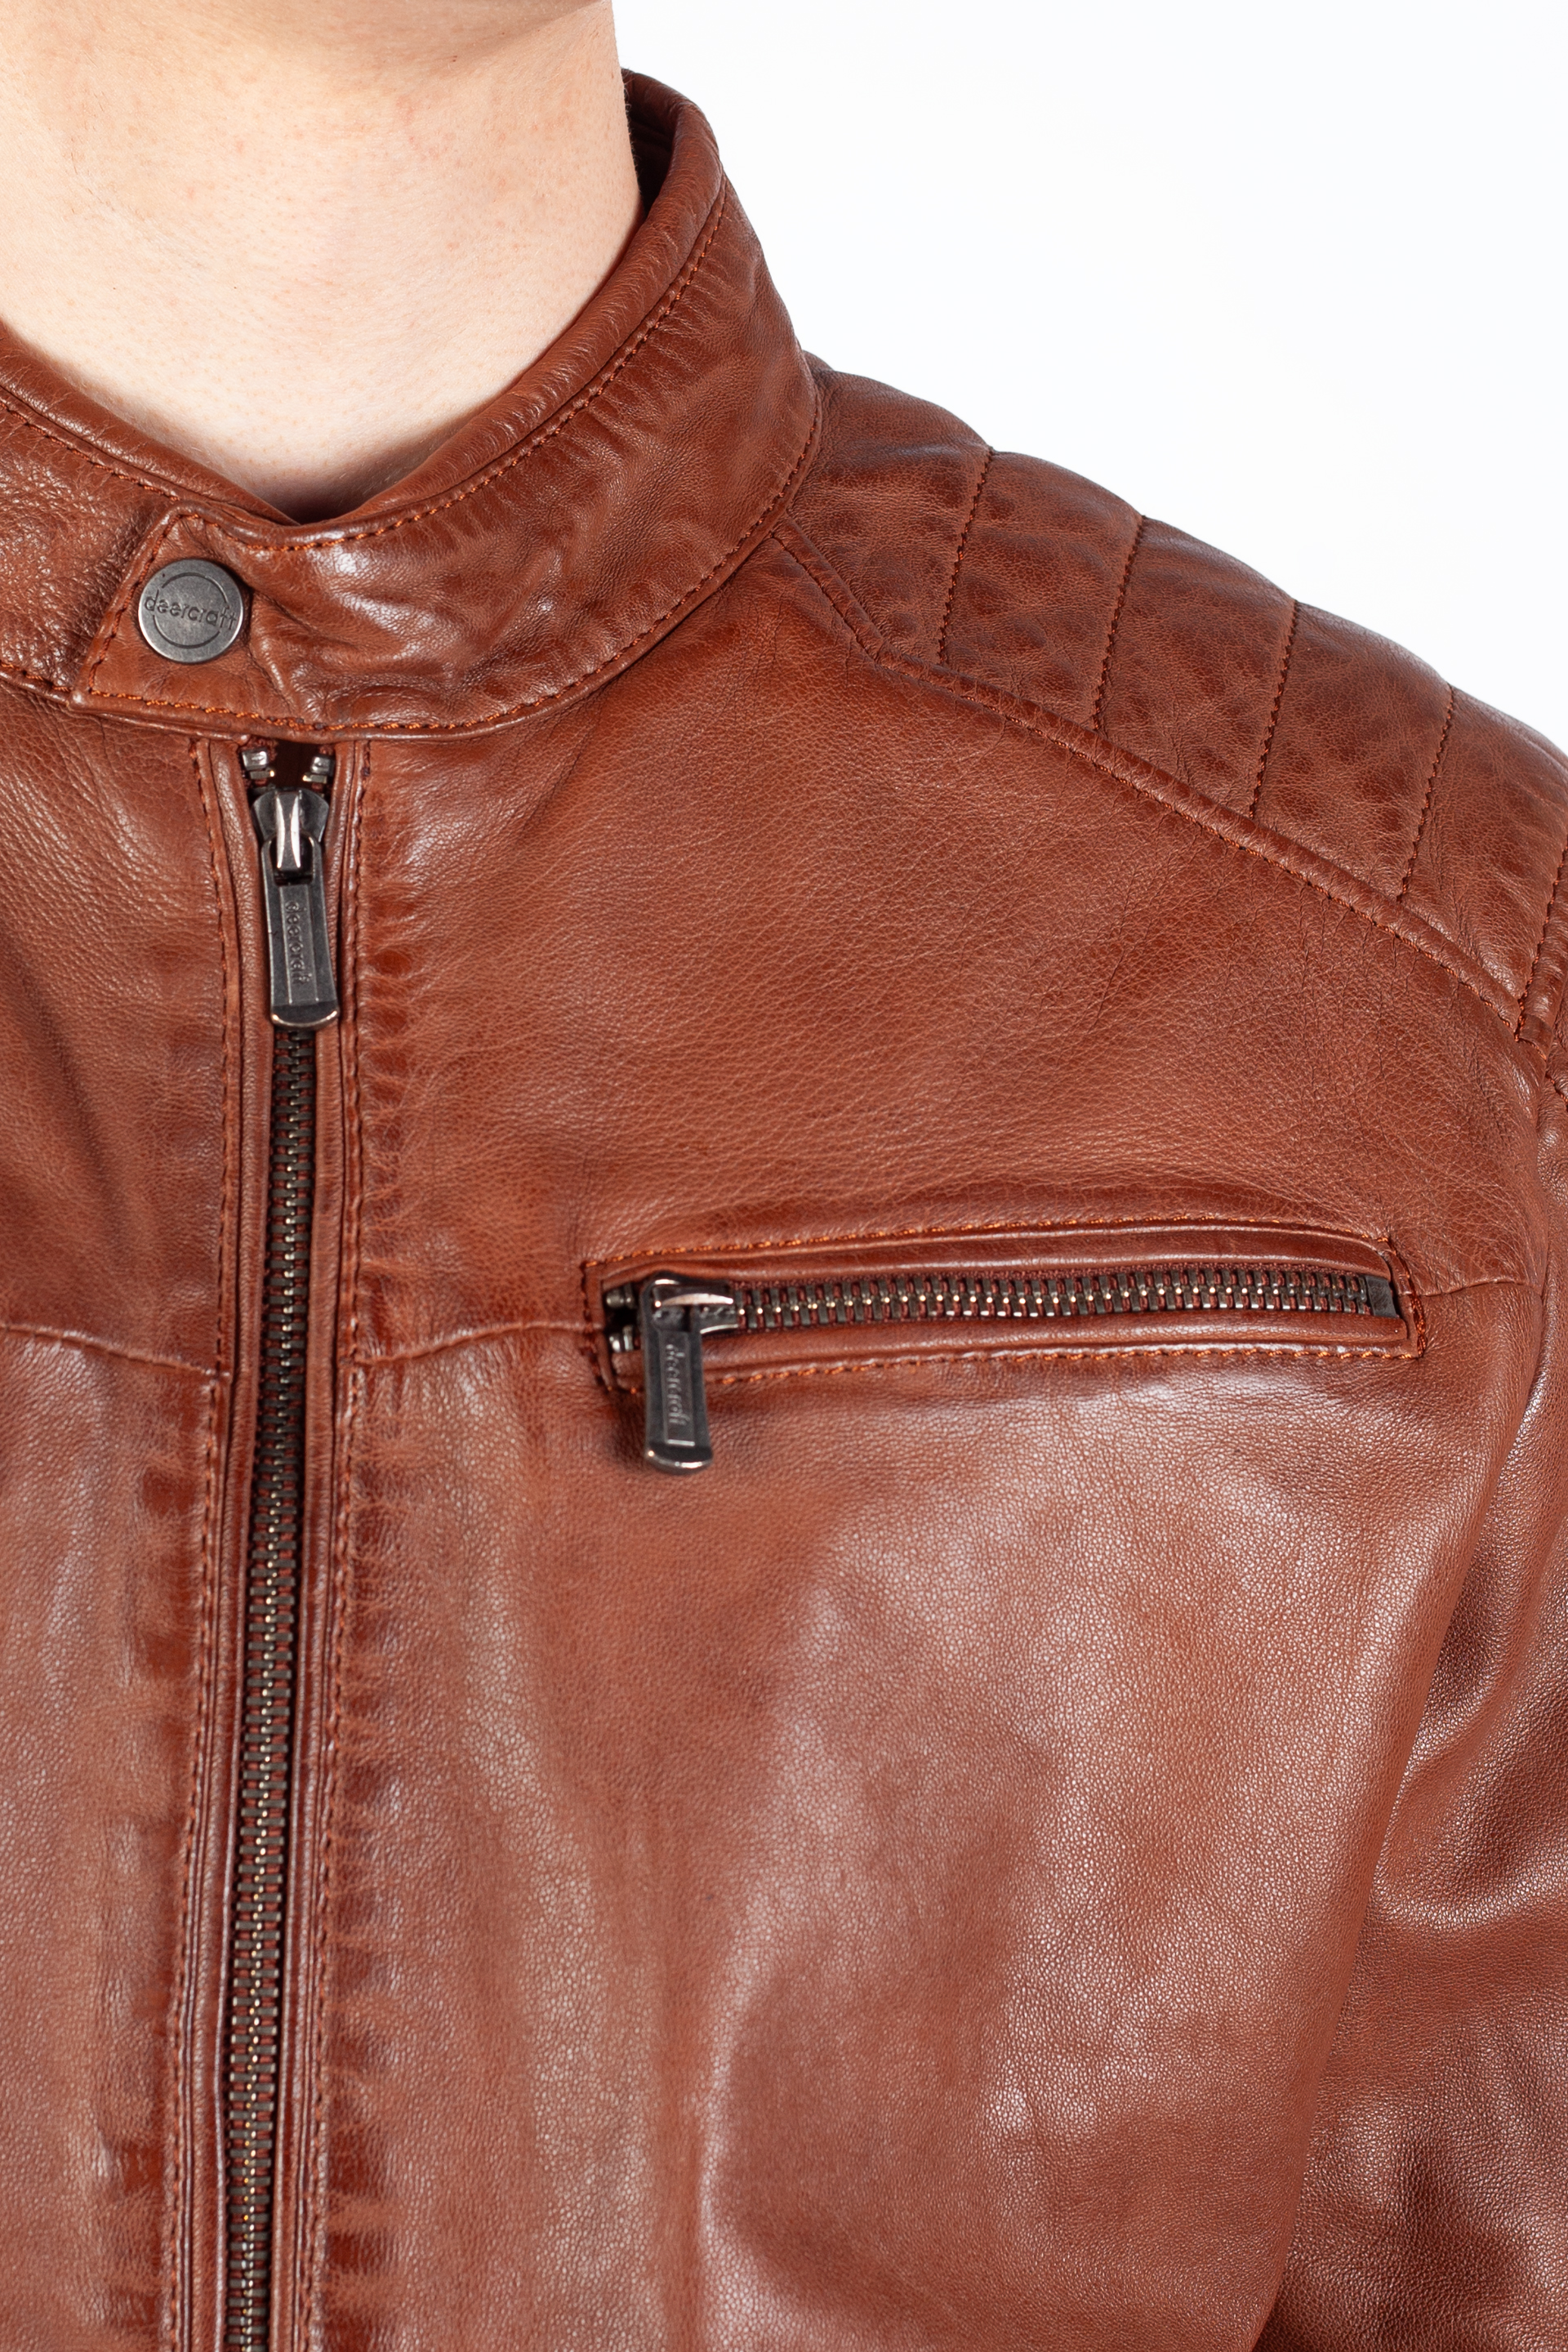 Leather jacket DEERCRAFT 3701-0126-cognac